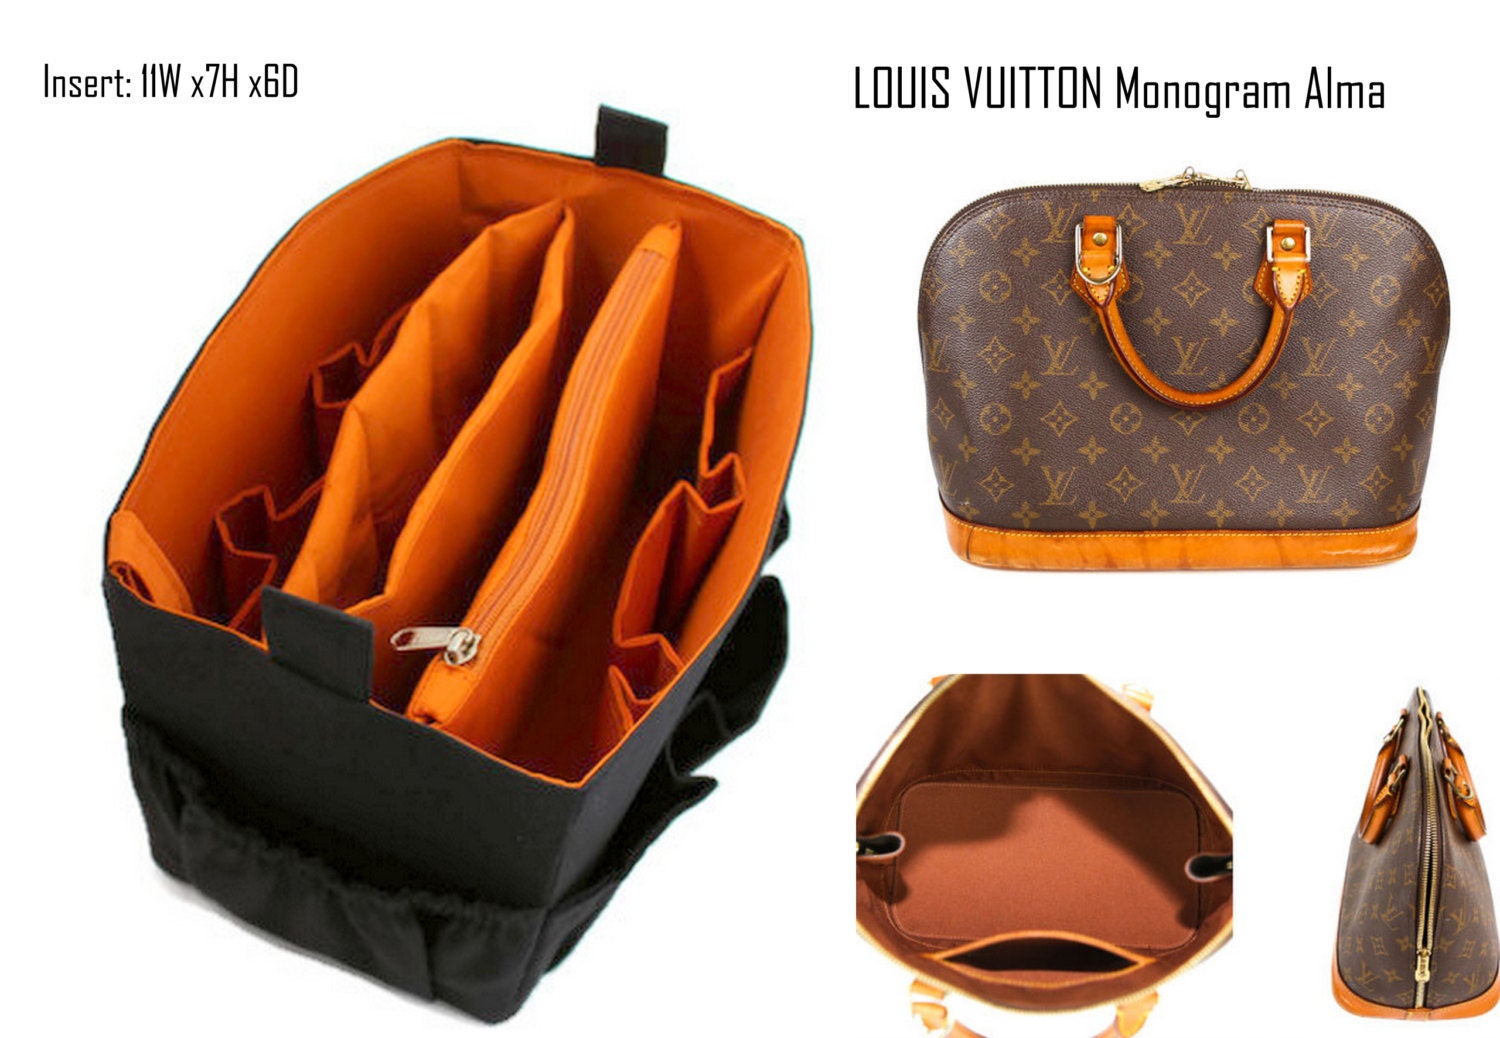 Buy Bag Organizer for Louis Vuitton Monogram Alma Handbag Purse Online in  India 